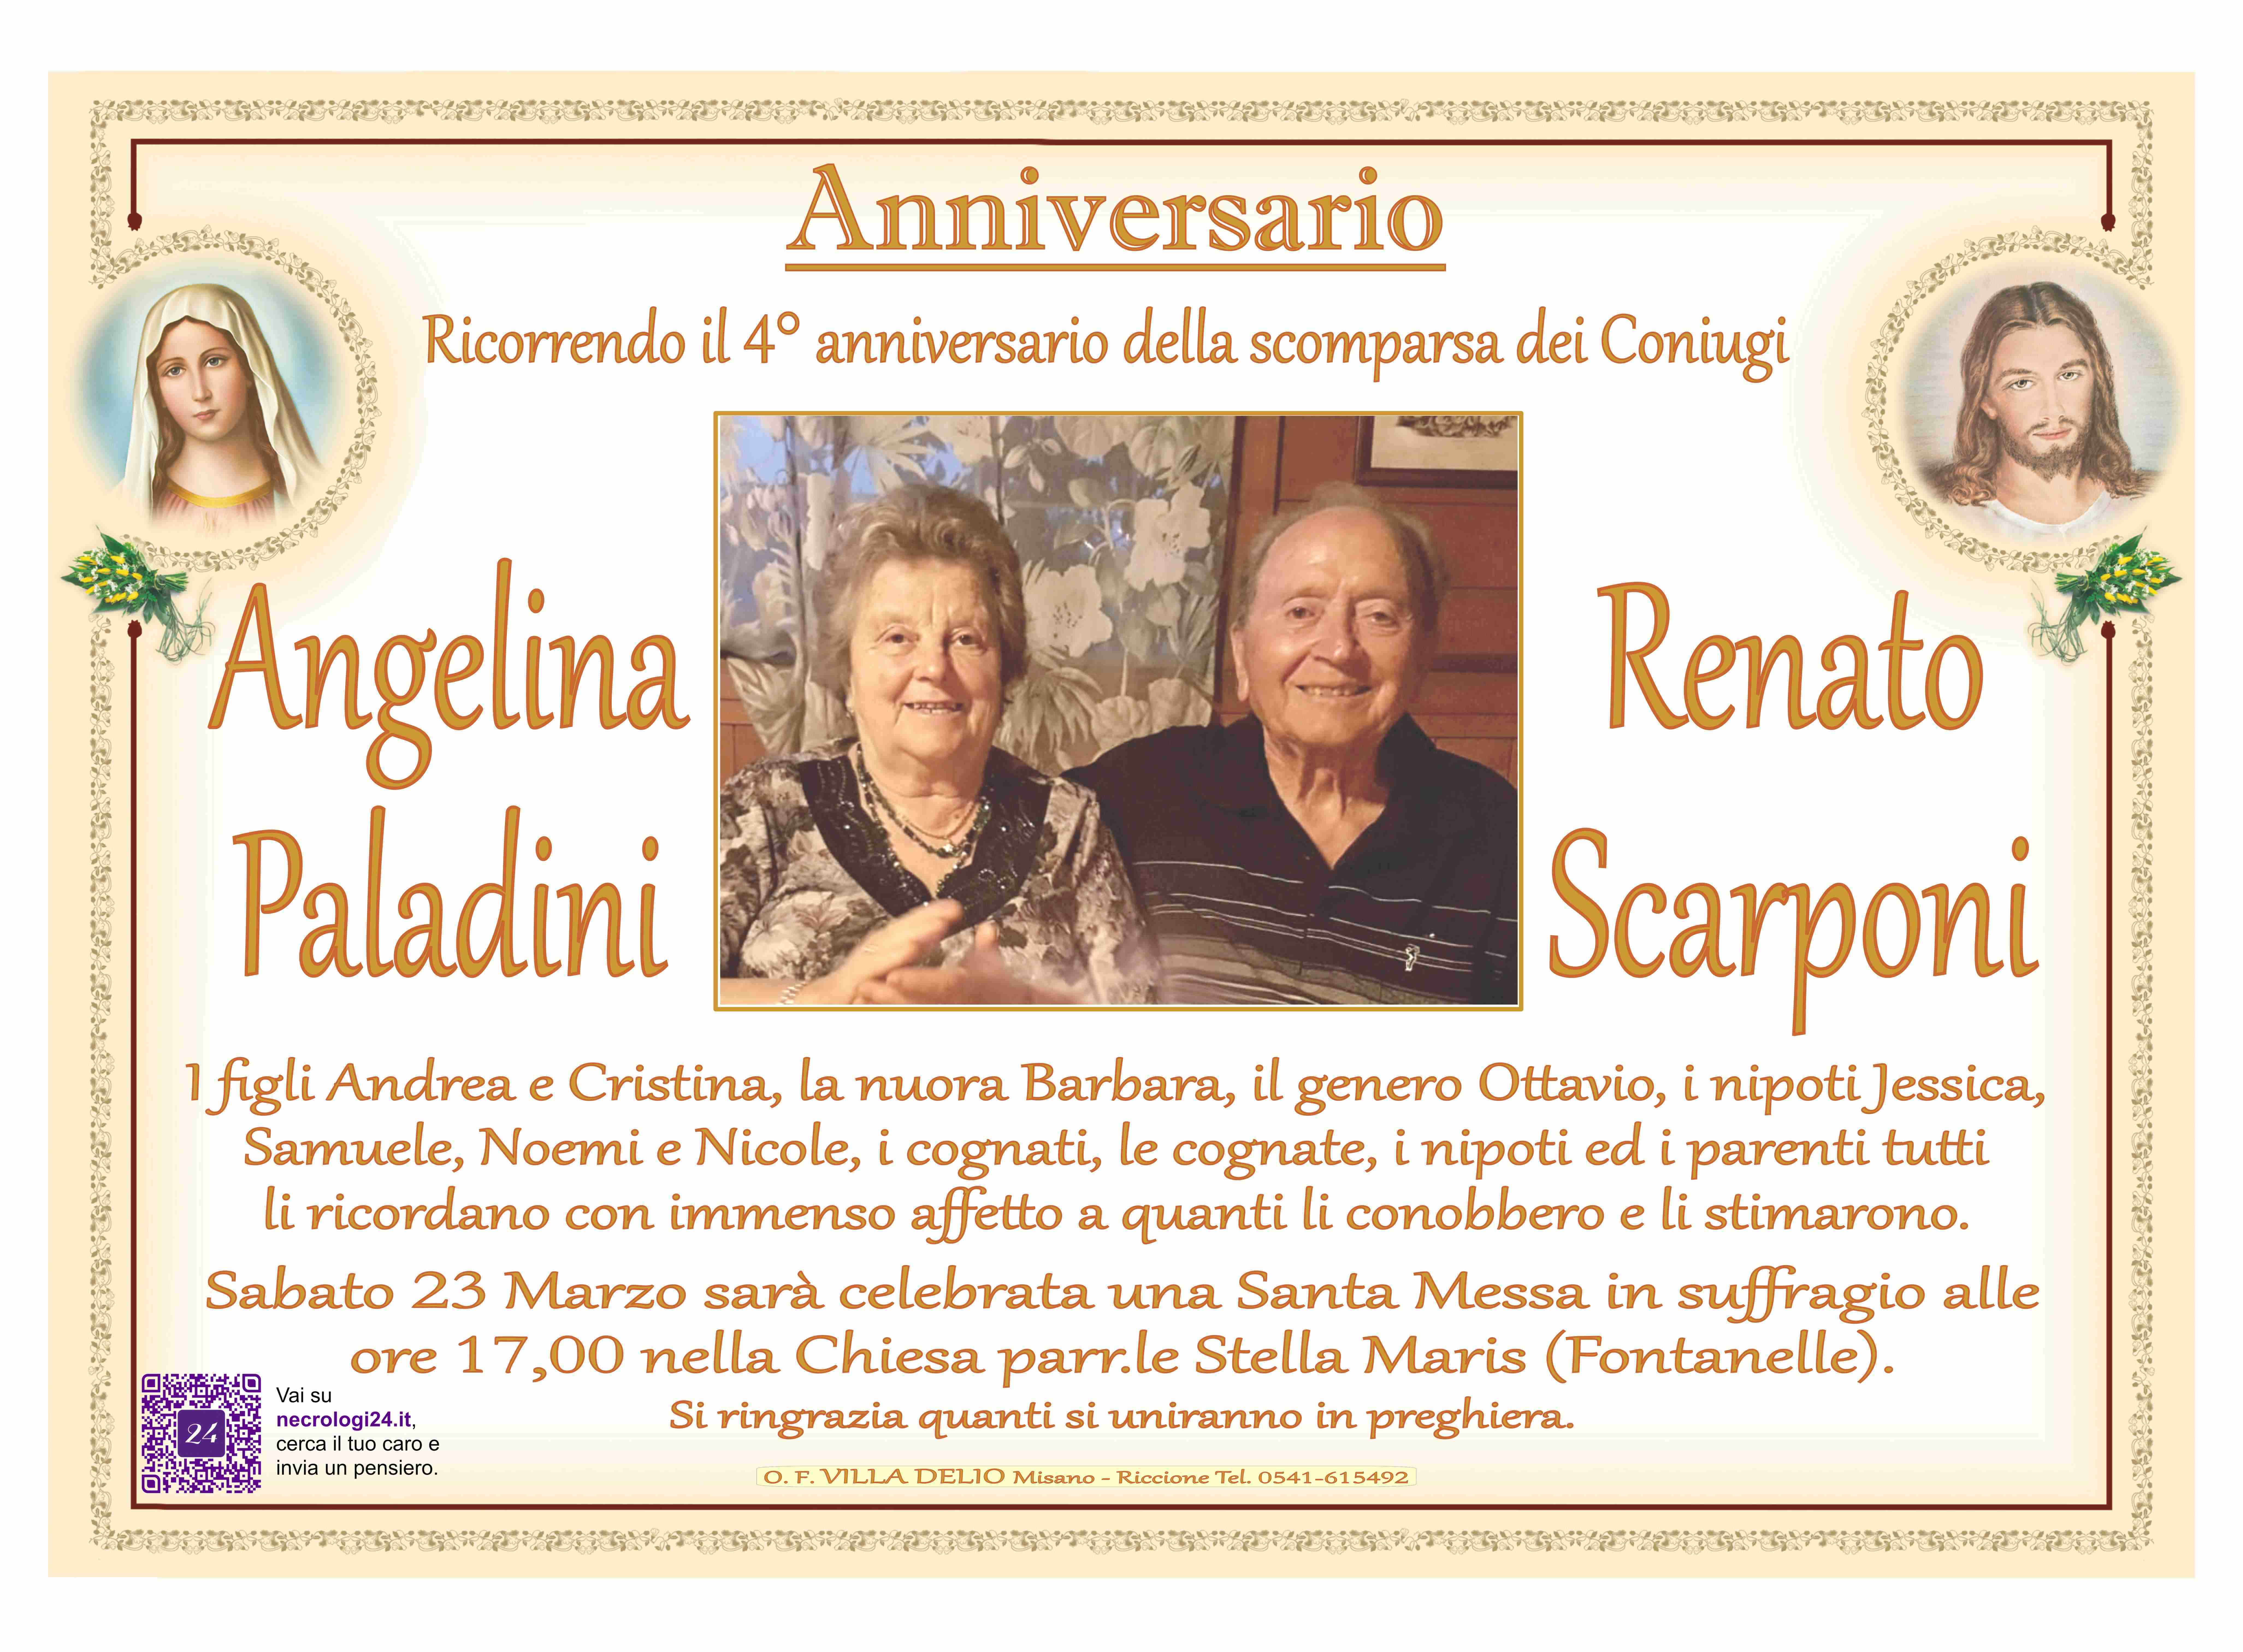 Renato Scarponi e Angelina Paladini